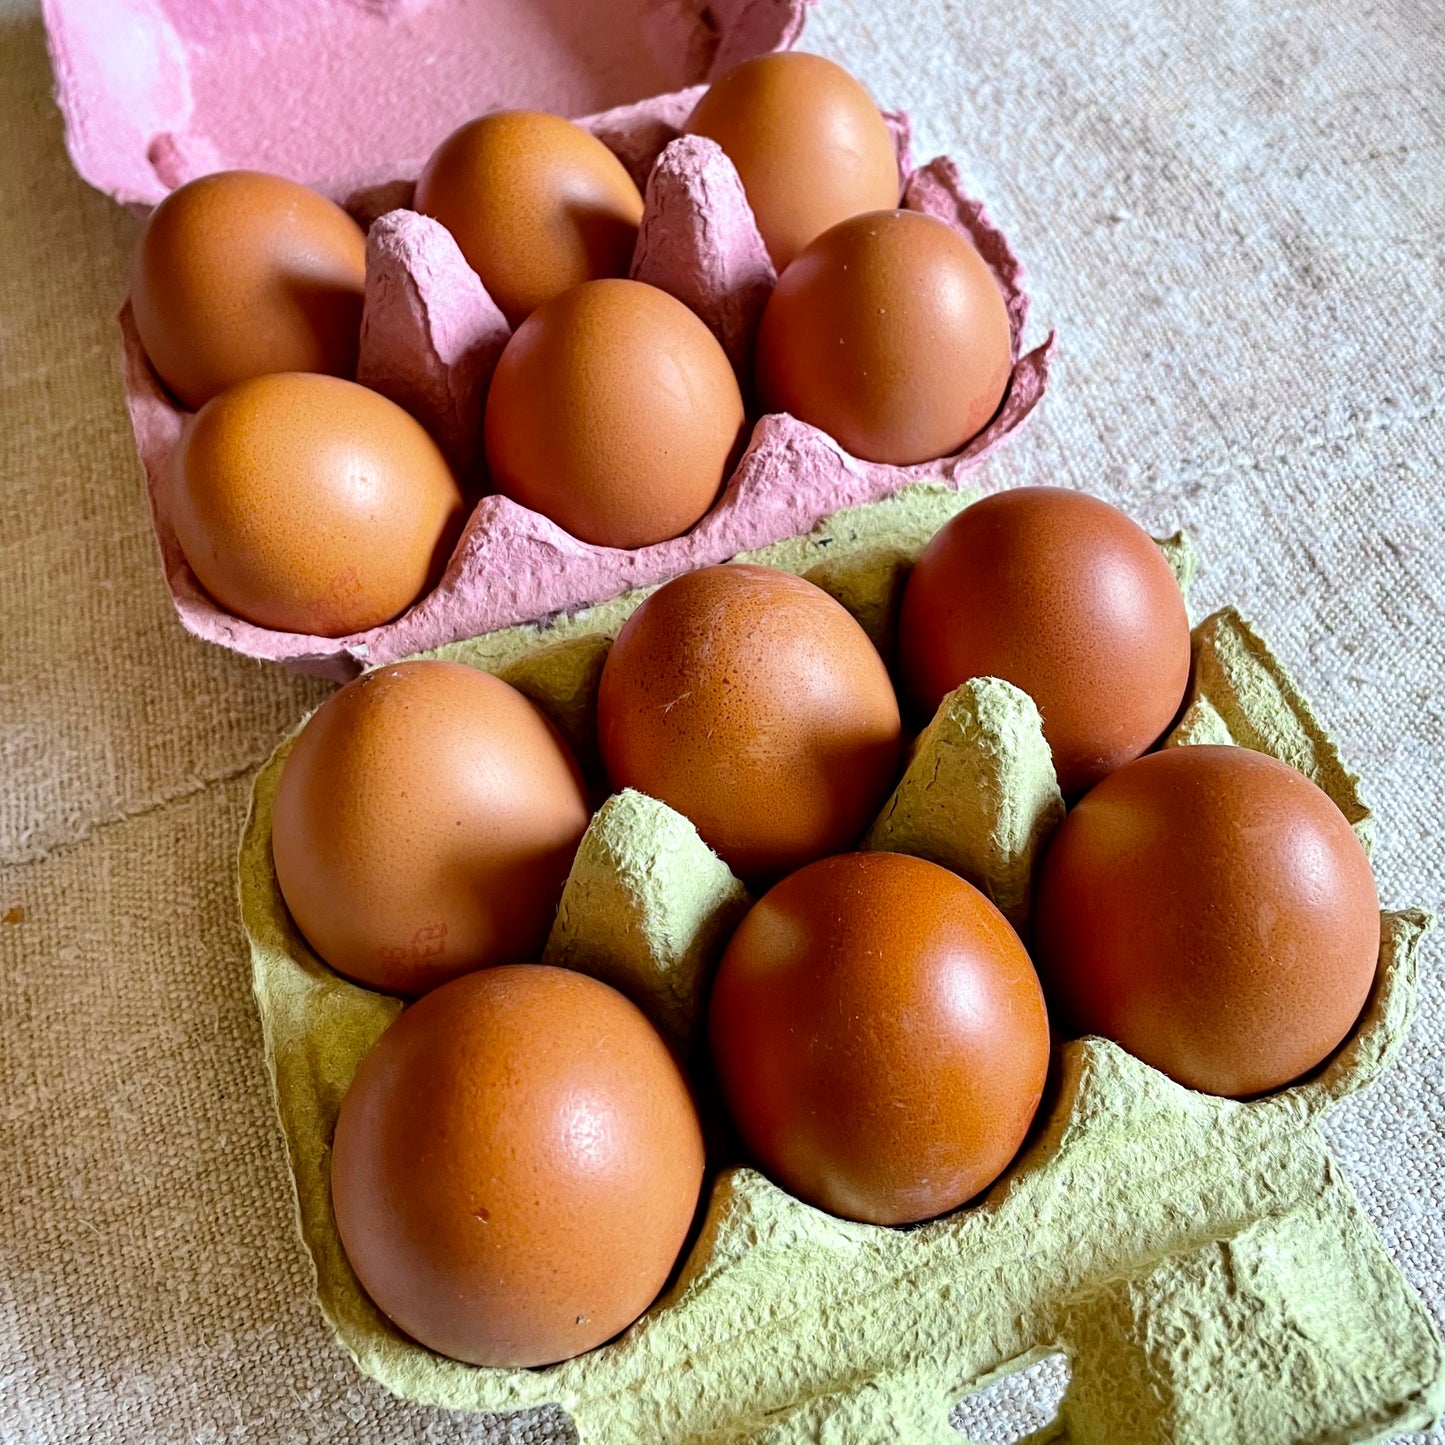 12x Oxfordshire Free Range Eggs